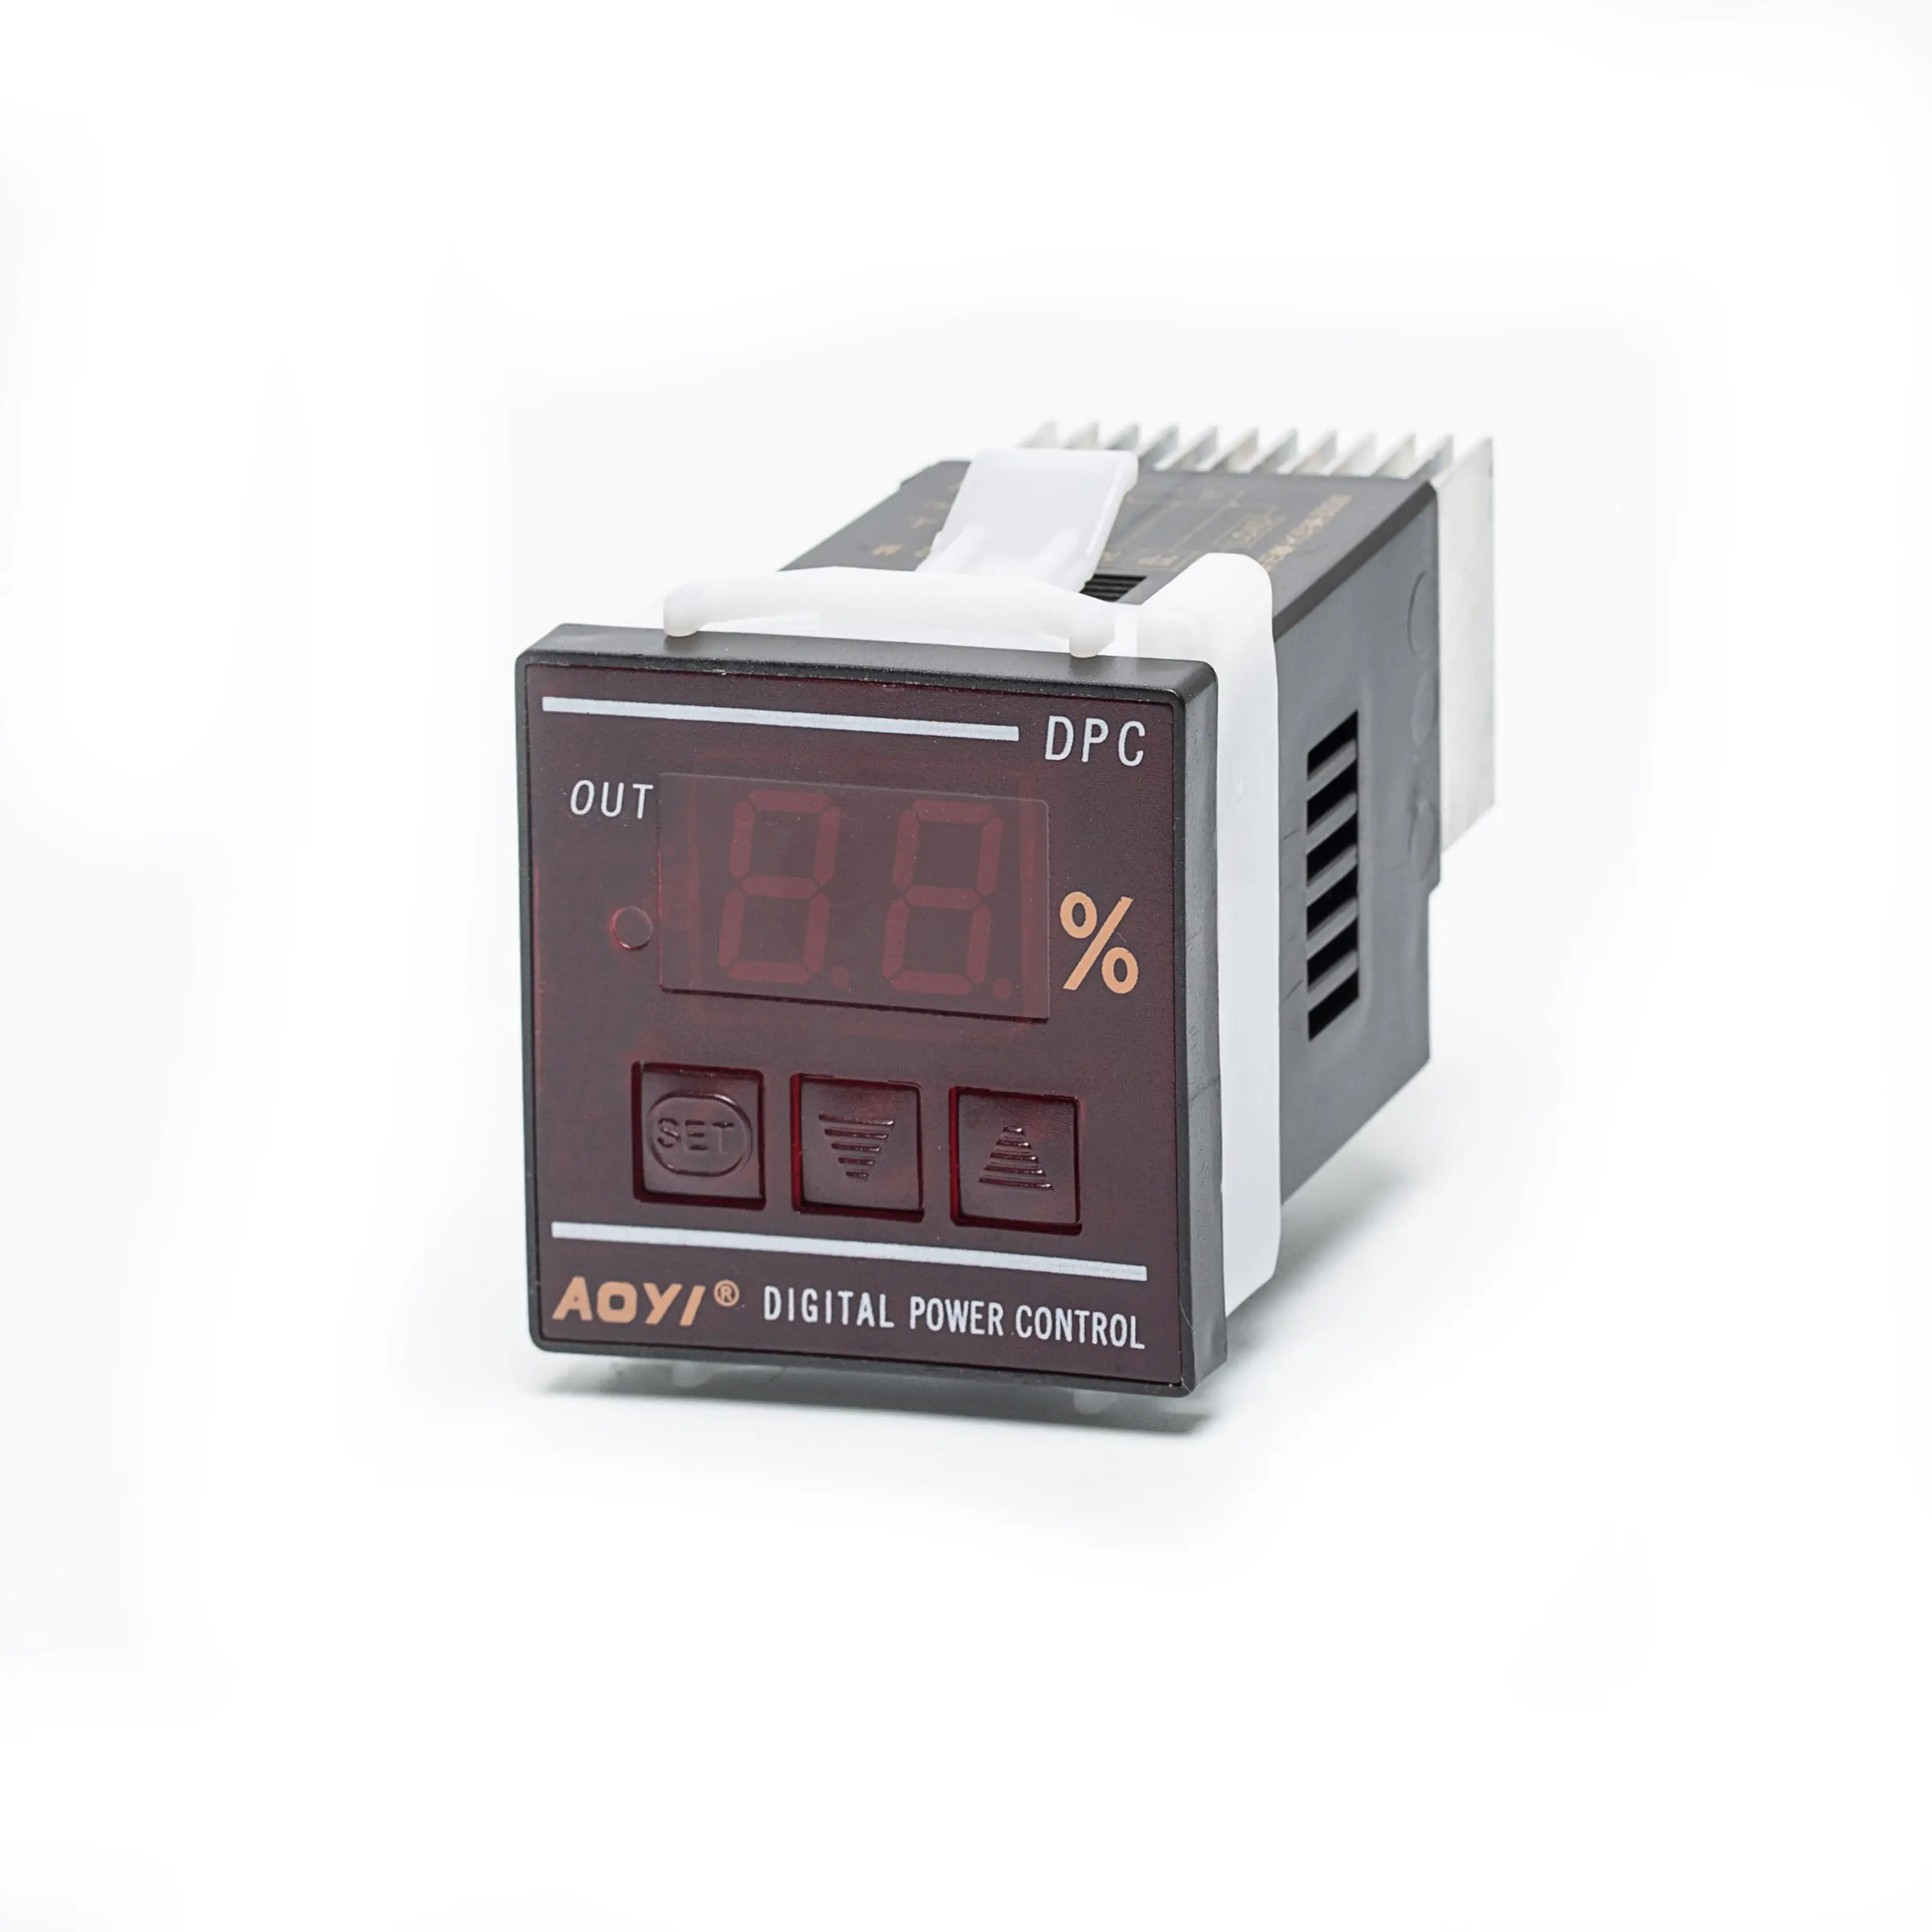 Aoyi 중국 도매 자동 전압 조정기 디지털 전원 컨트롤러 DPC-2-M